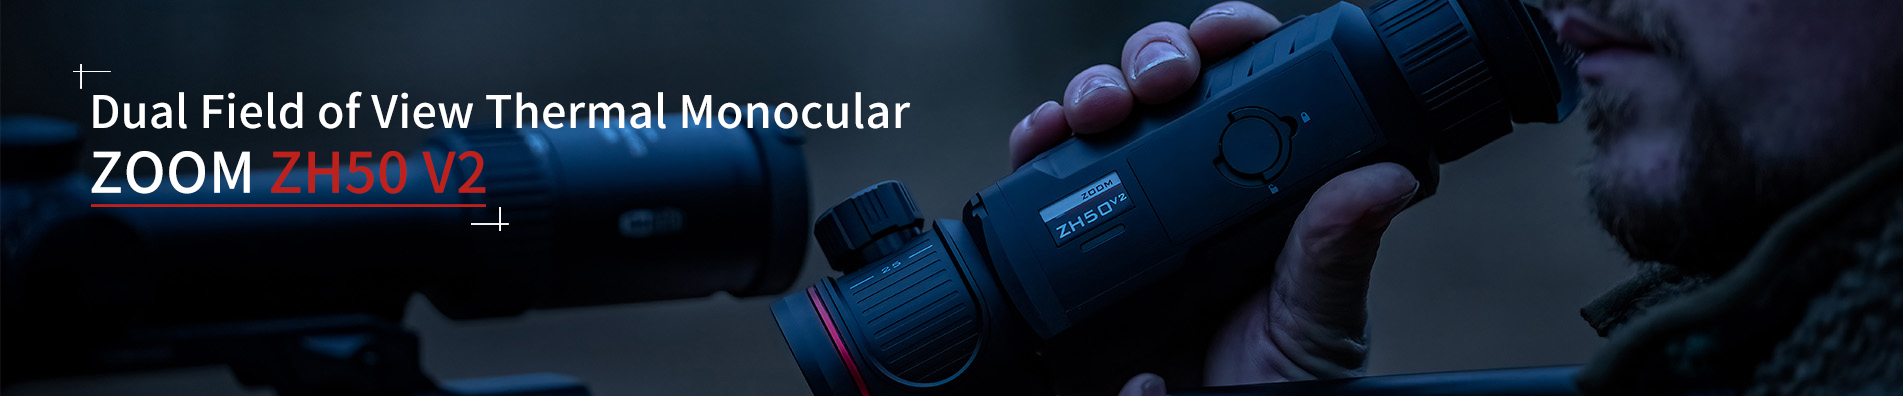 Thermal Imaging Monocular ZOOM ZH50 V2